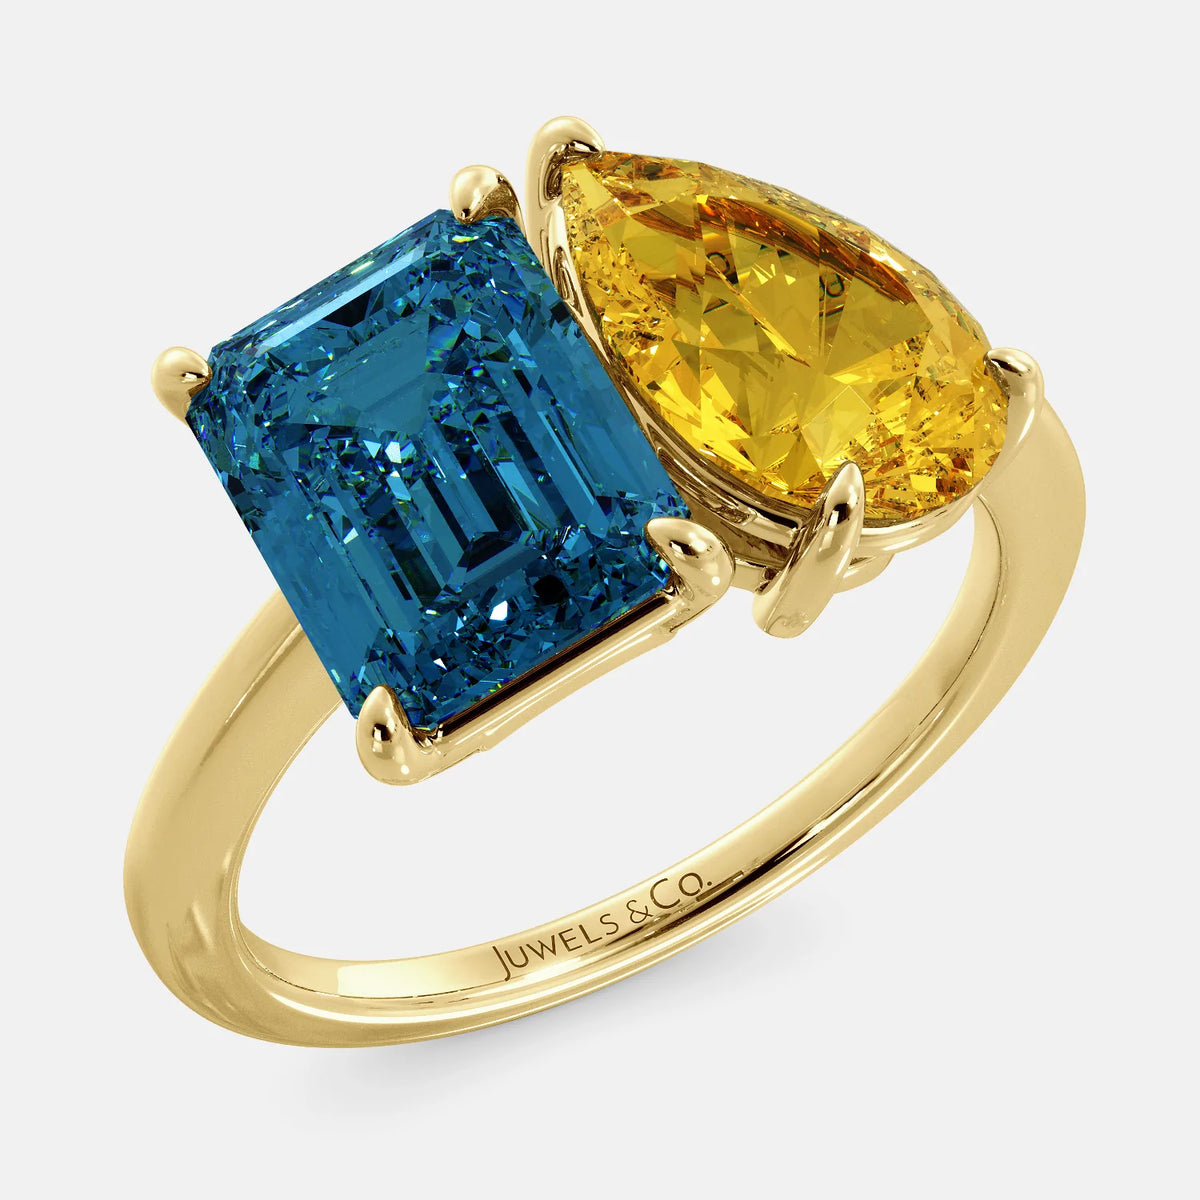 Buy Akshita gems Natural Yellow Topaz Gemstone Ring 4.00 Ratti / 3.00 Carat  (Sunela Stone Ring) Lab Certified Adjustable Ring in Panchdhatu for Men and  Women, Sunhela Stone Ring at Amazon.in